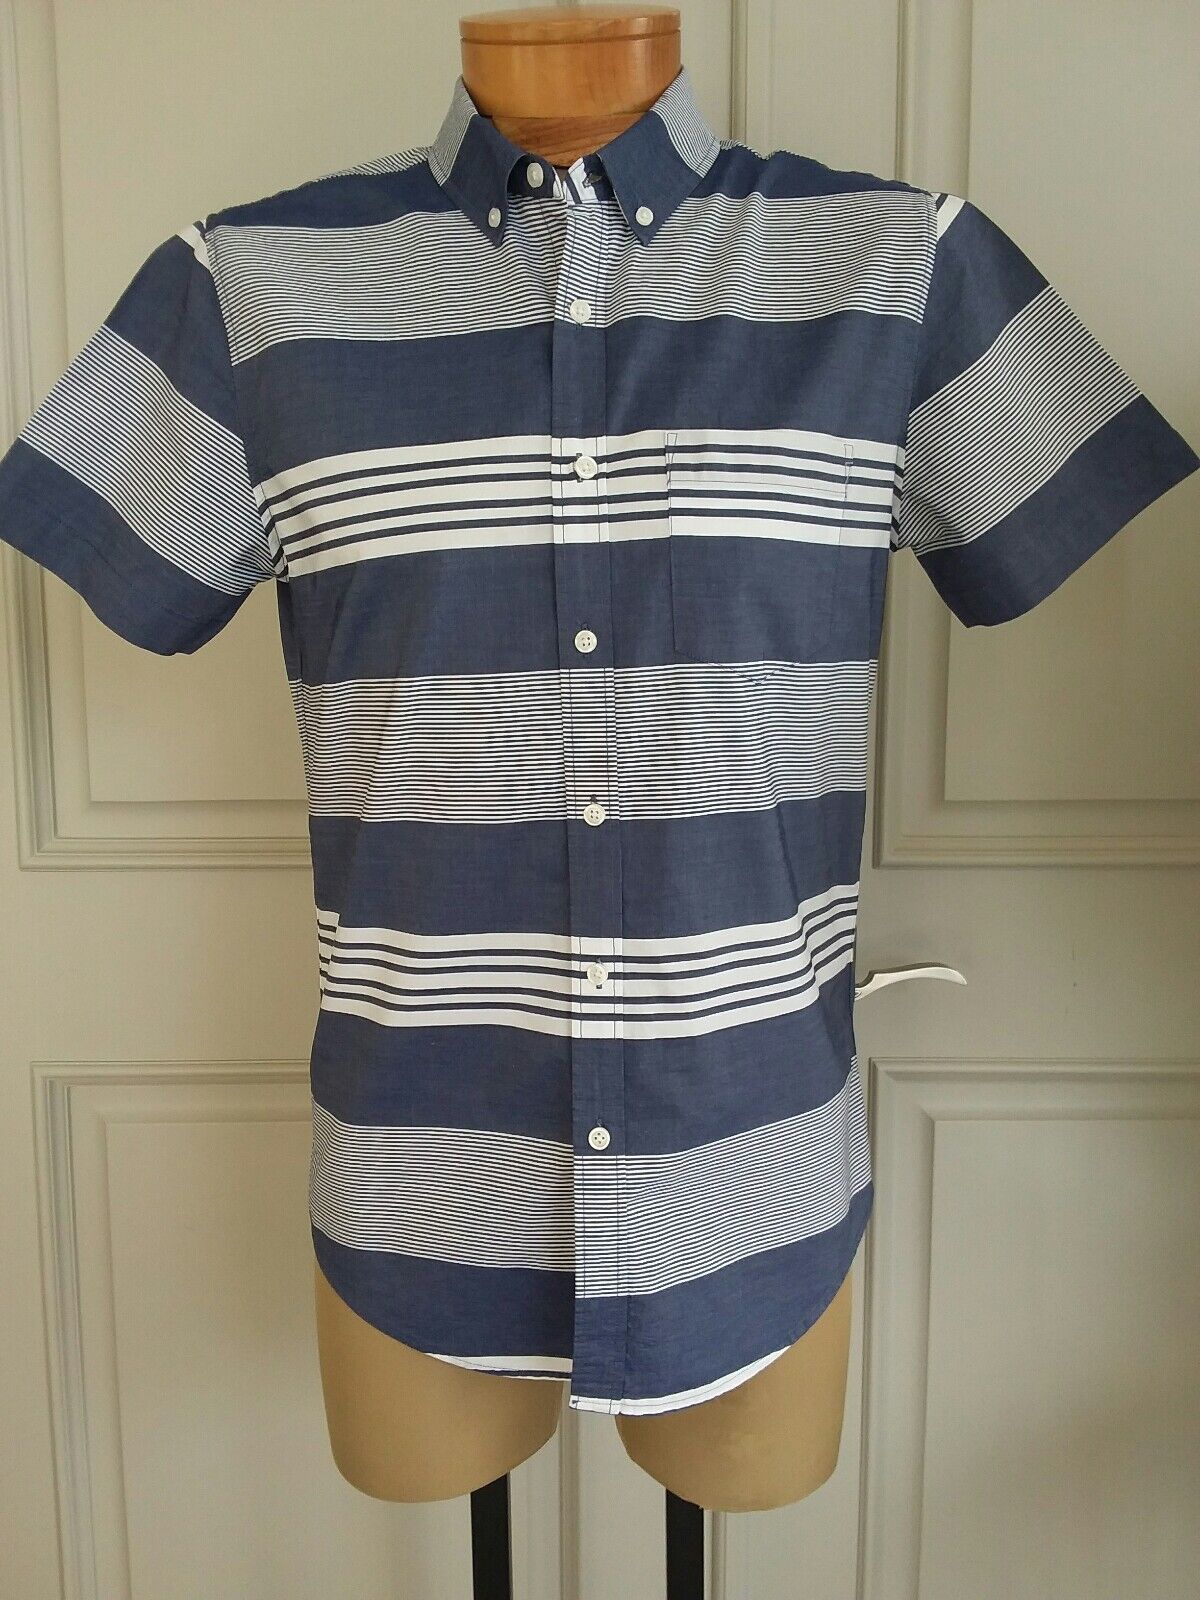 21 men horizontal striped short sleeve button down shirt top sz S